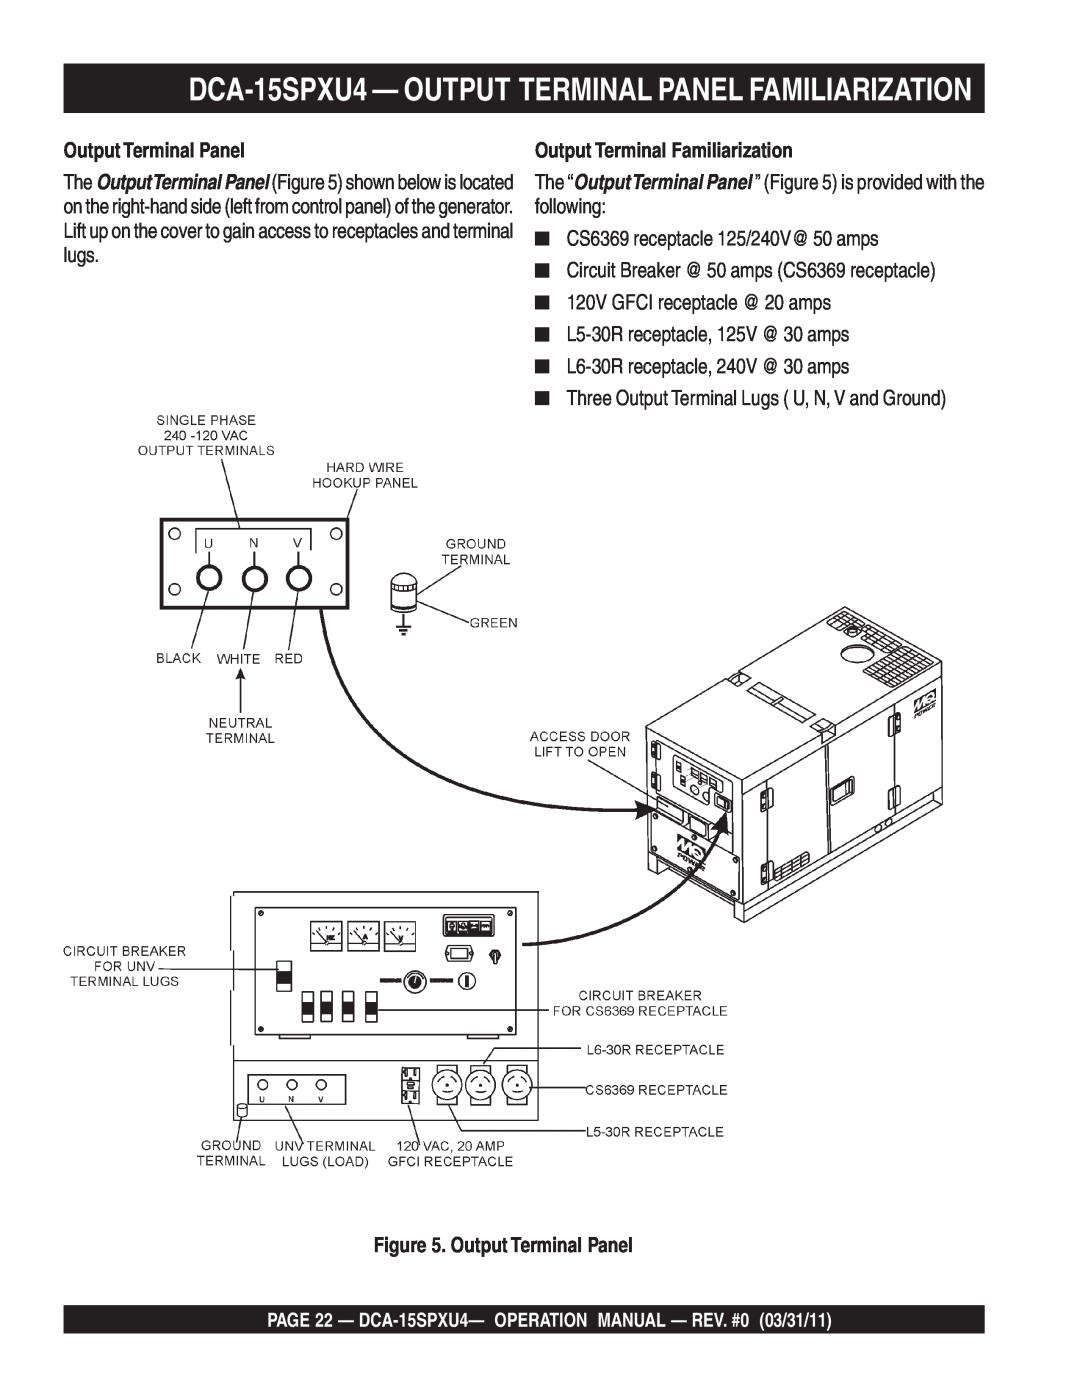 Multiquip DCA-15SPXU4 operation manual Output Terminal Familiarization, Output Terminal Panel 